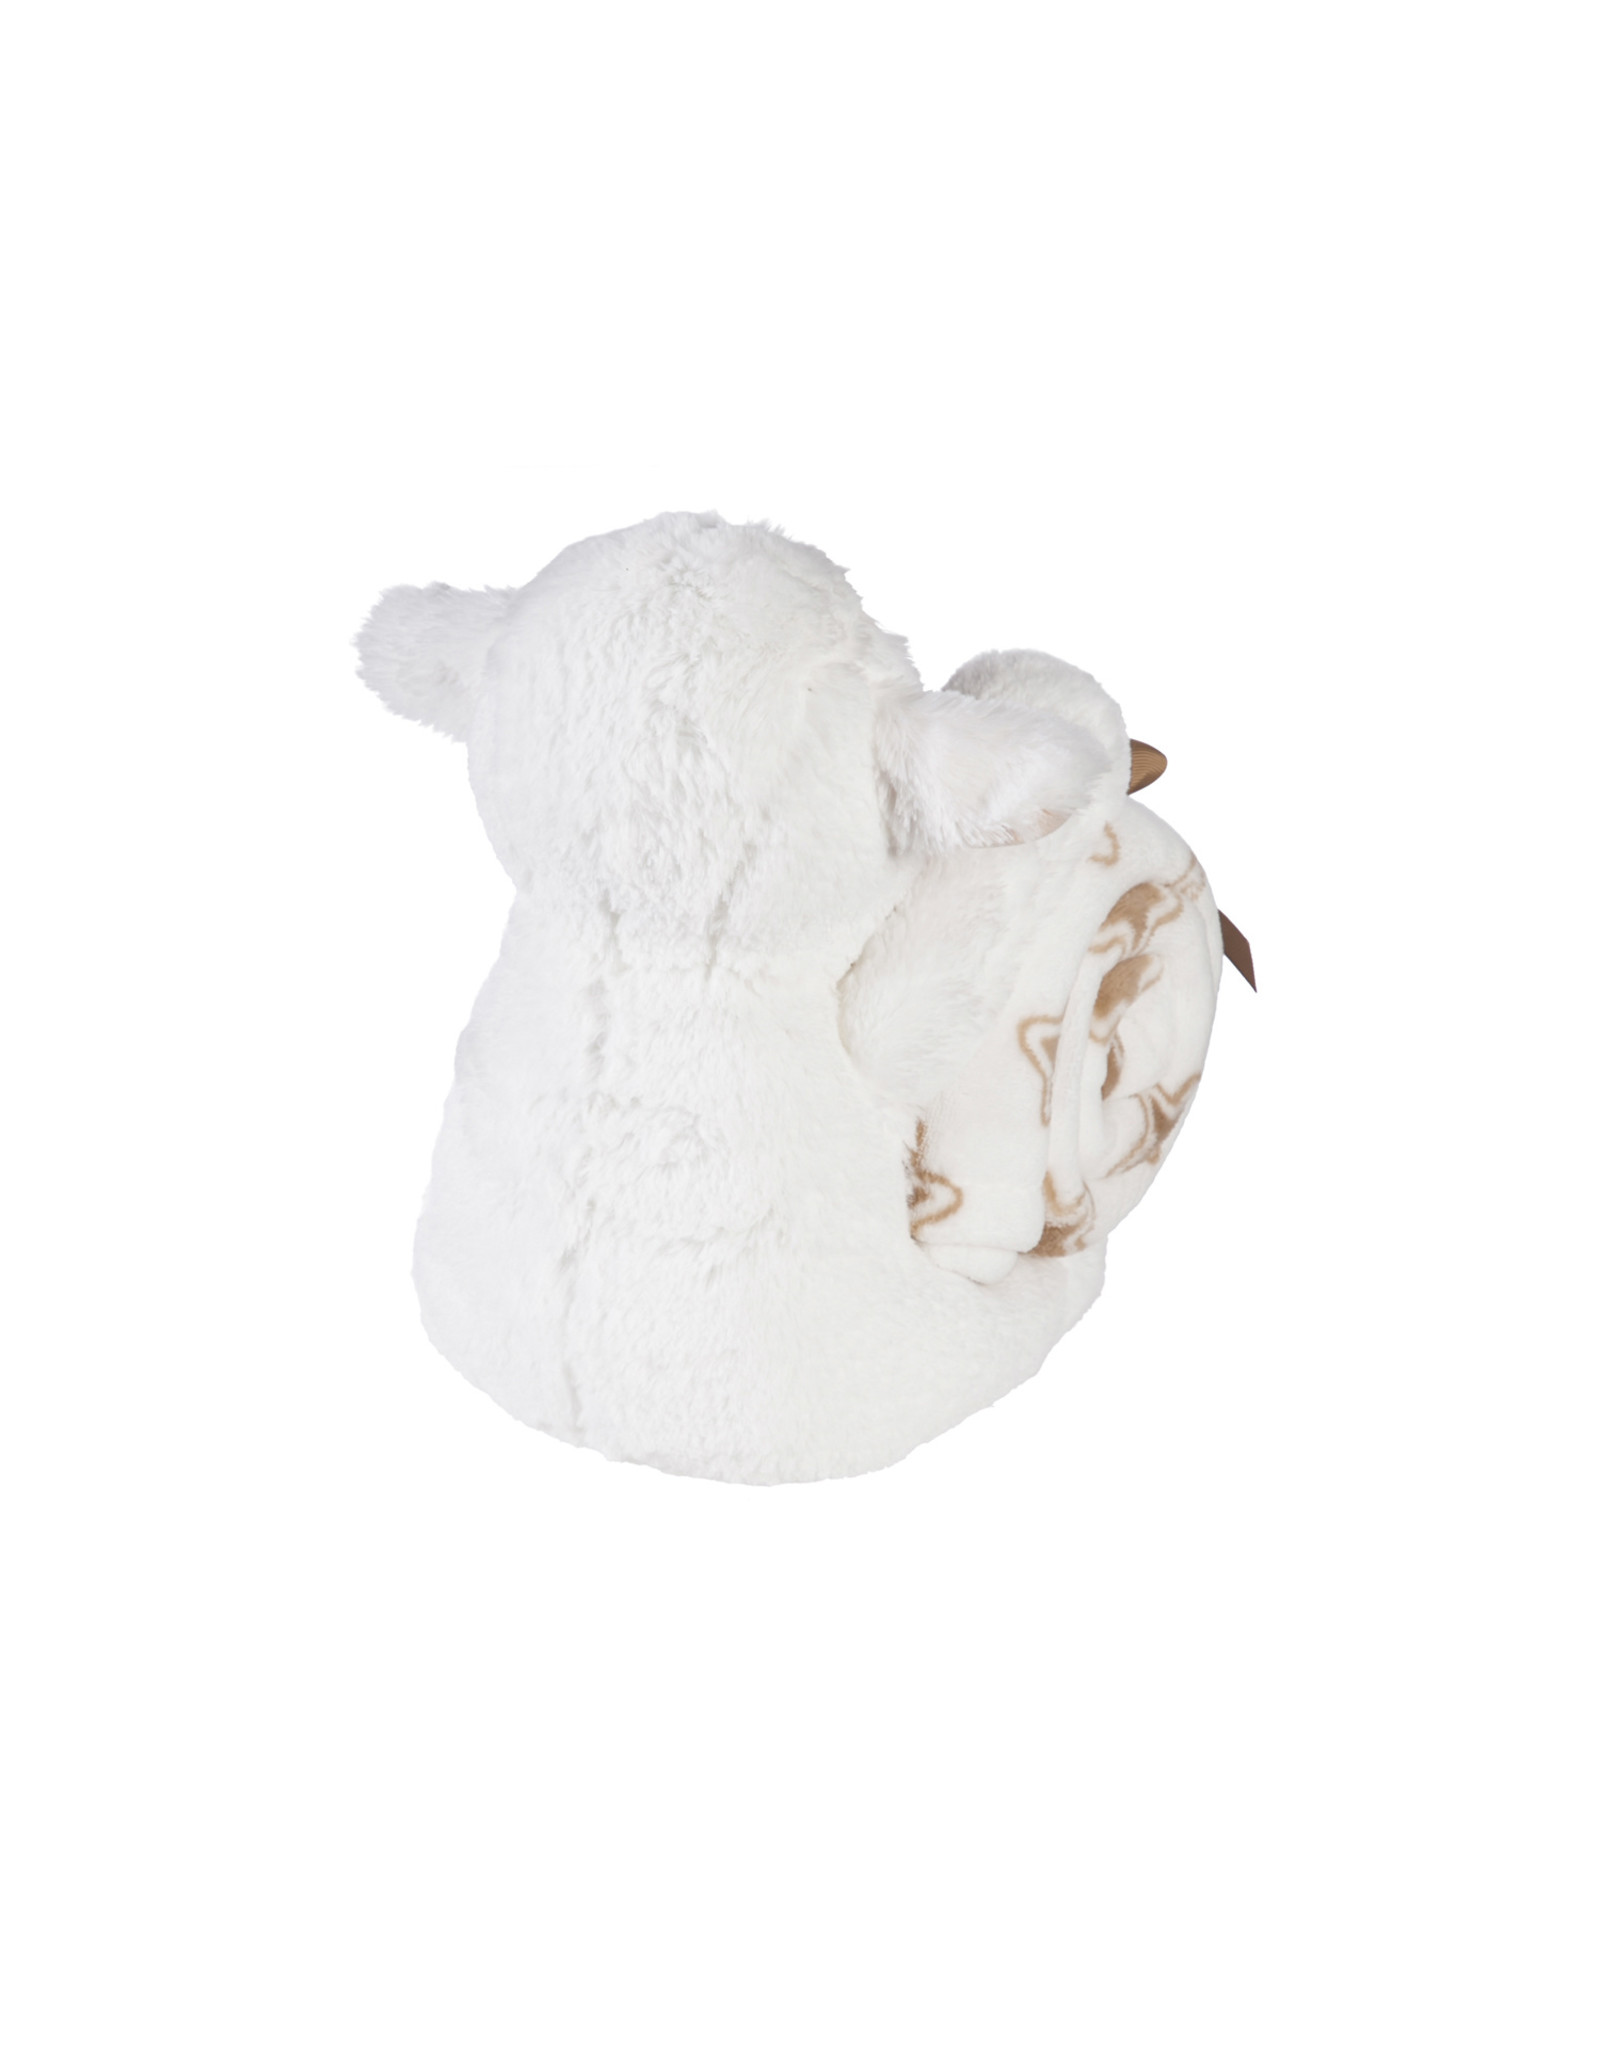 Evergreen Enterprises Cuddly Lamb 10" Stuffed Animal w/ Blanket Gift Set, Cream